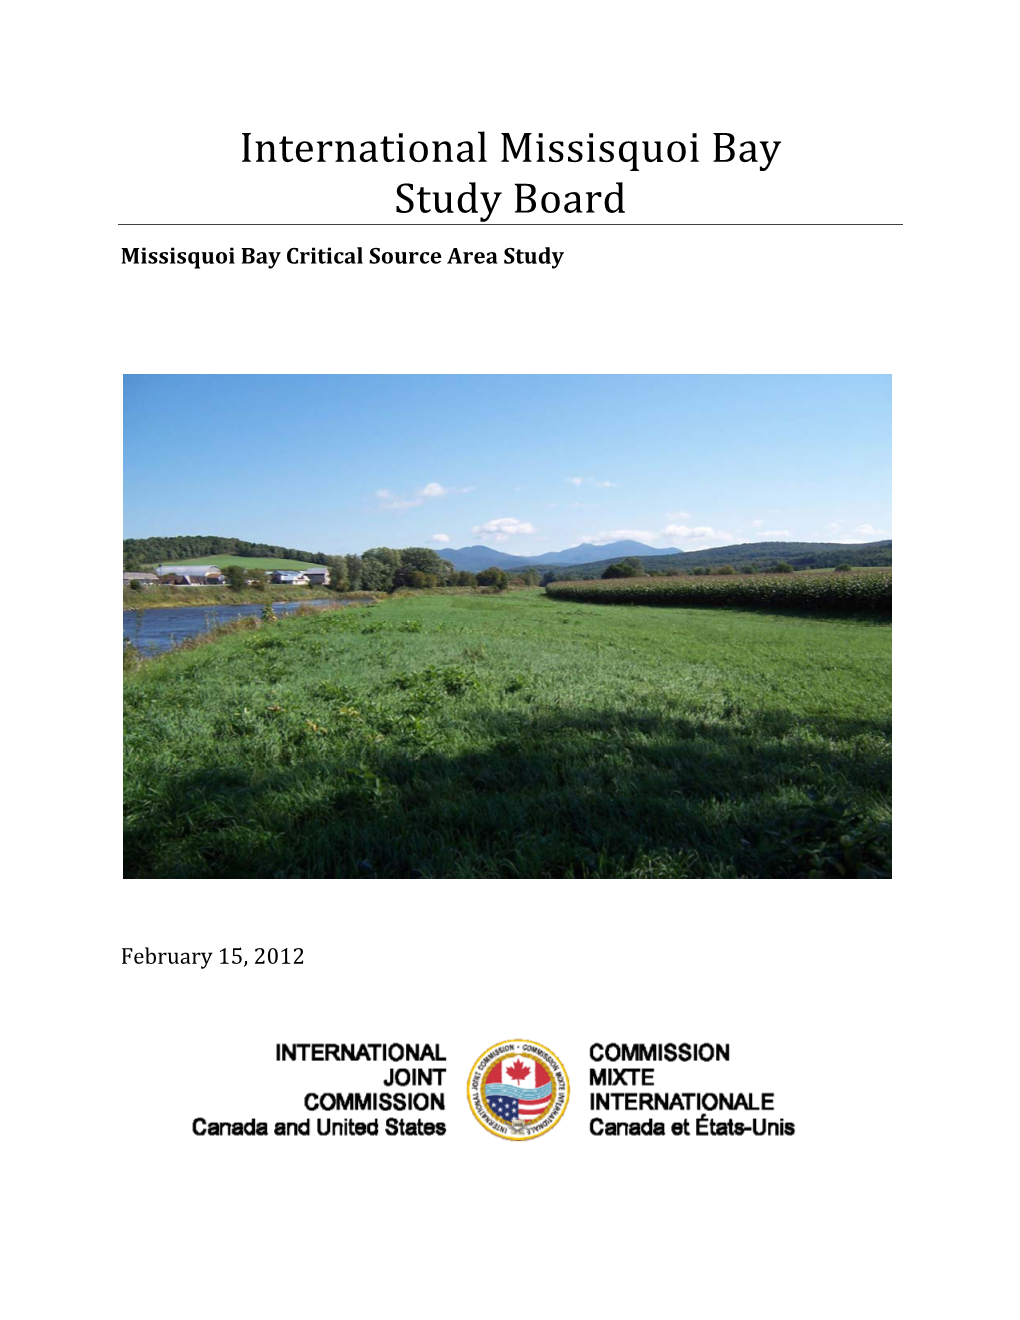 International Missisquoi Bay Study Board Missisquoi Bay Critical Source Area Study